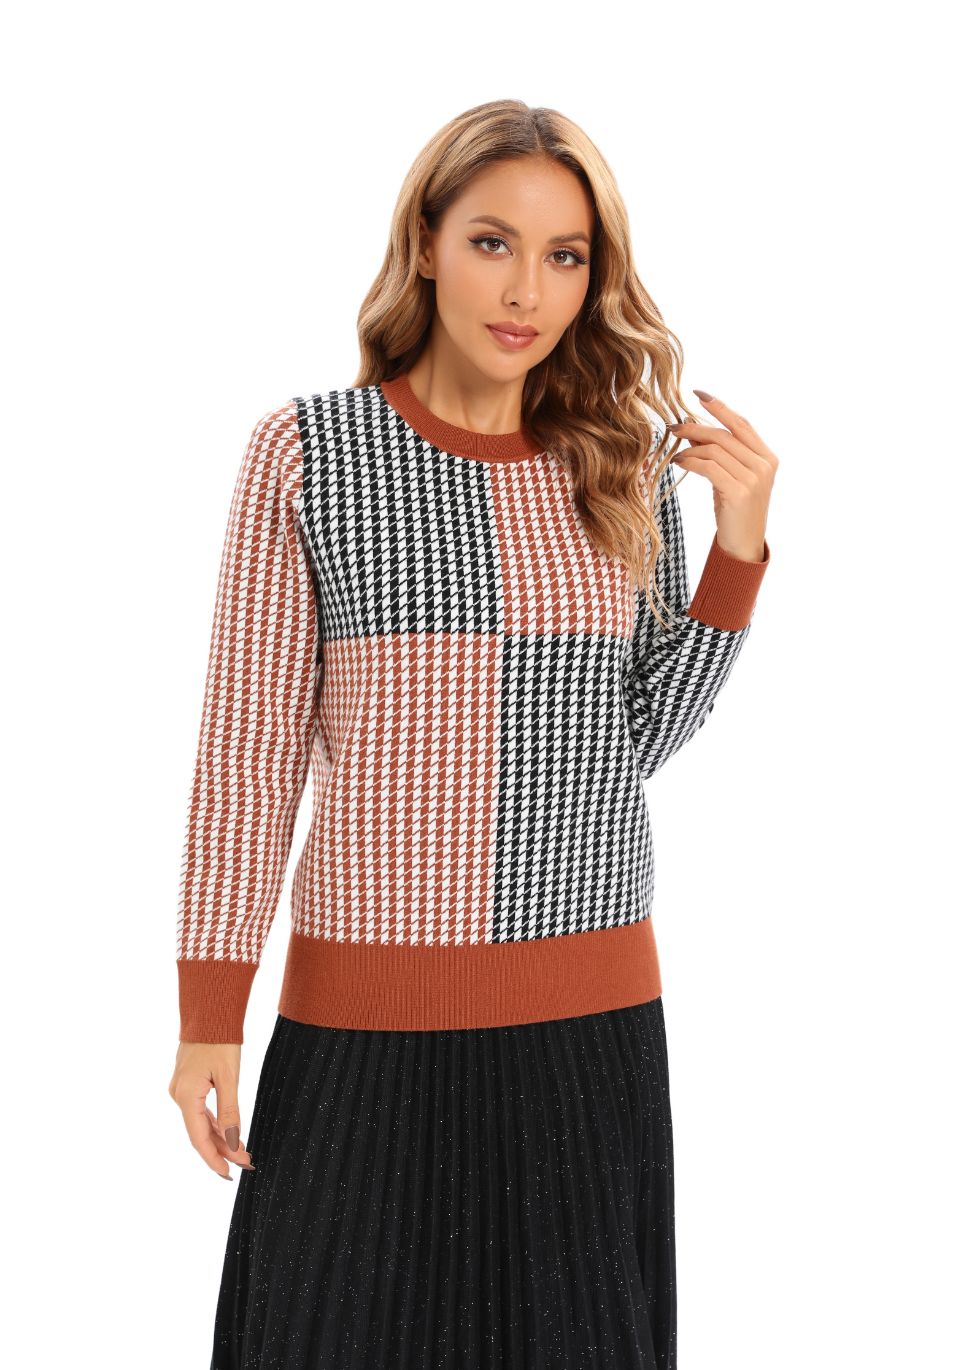 Essential Design Knitted Sweater - seilerlanguageservices